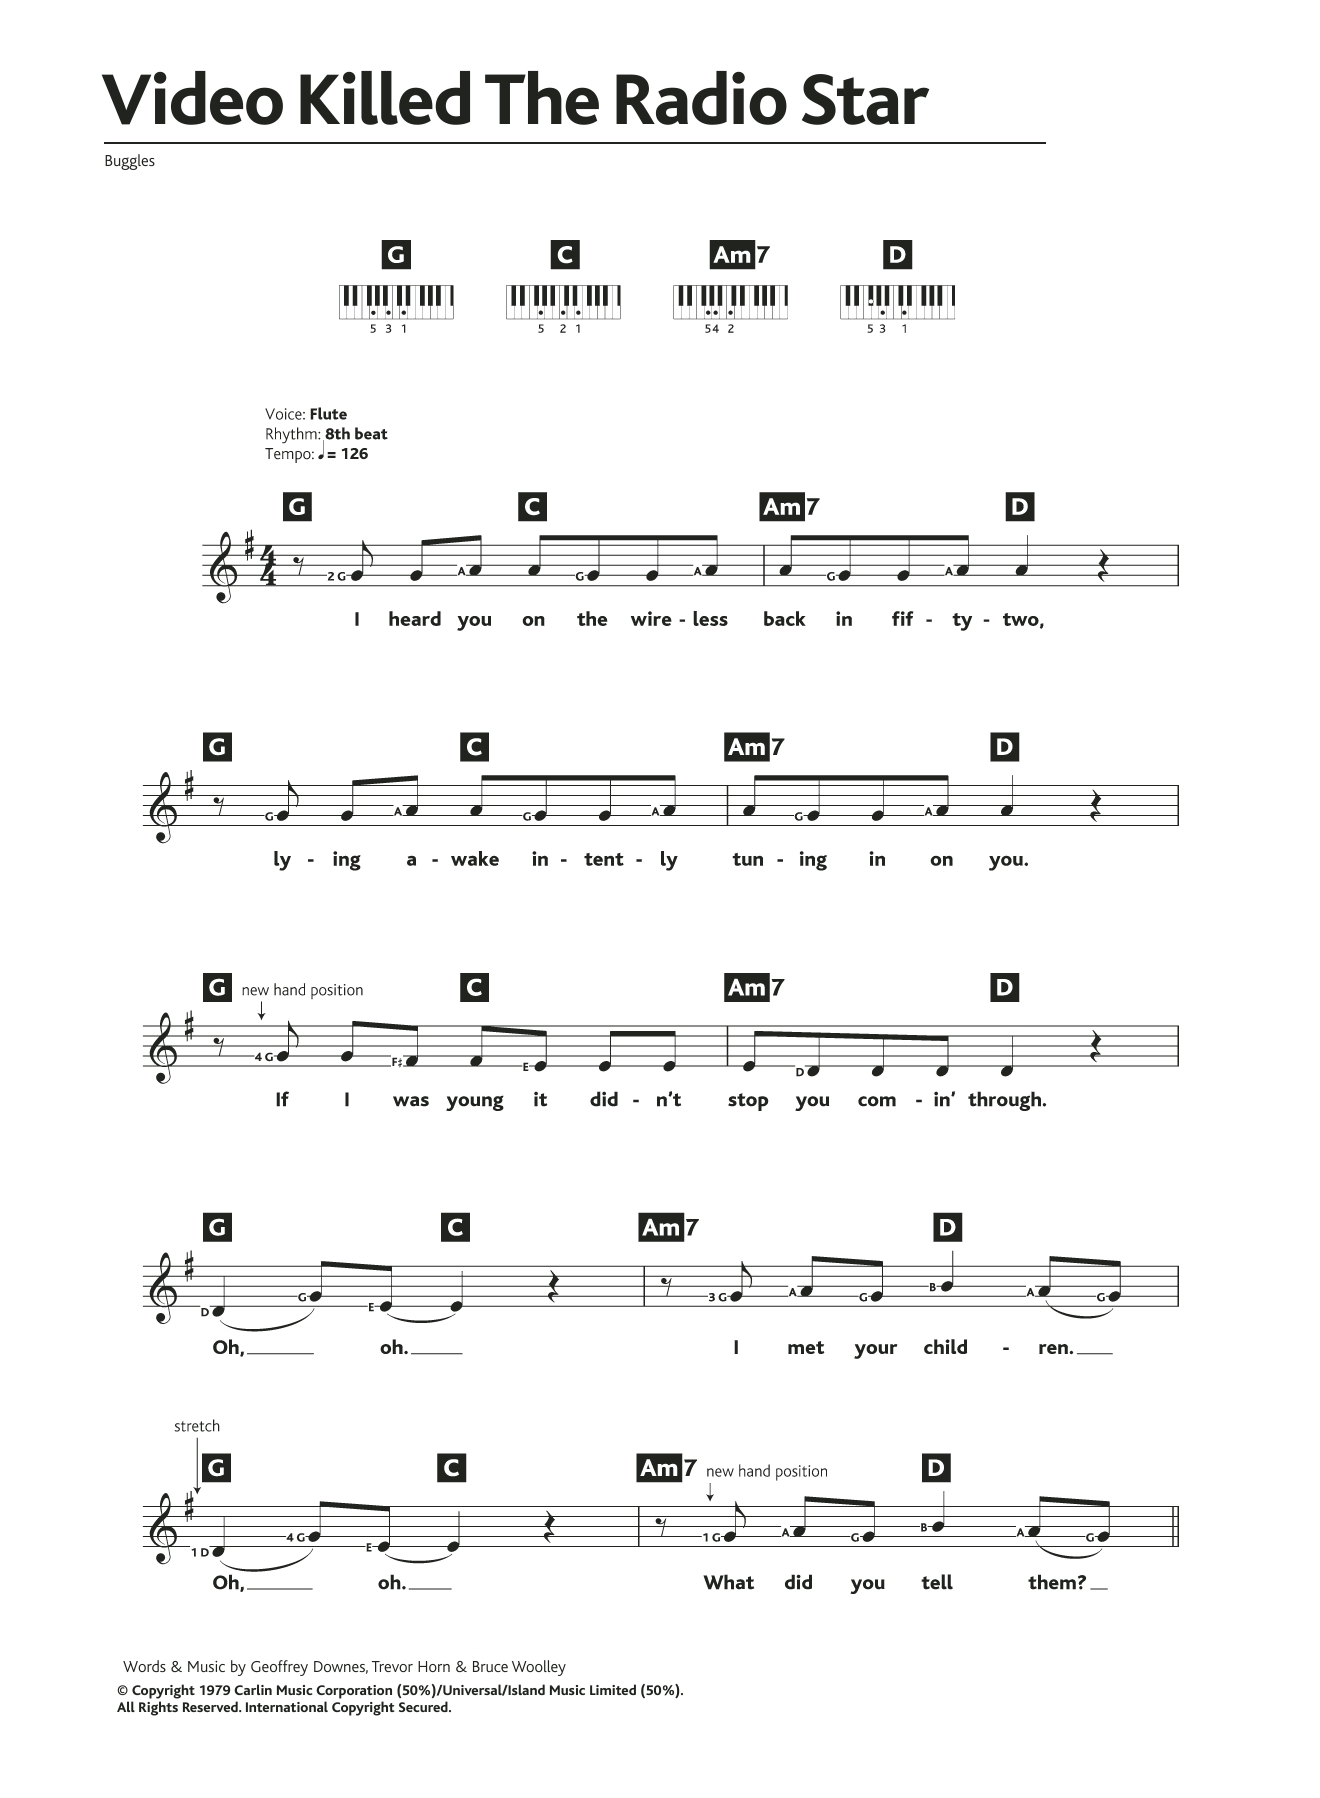 Buggles Video Killed The Radio Star Sheet Music Notes & Chords for Guitar Chords/Lyrics - Download or Print PDF